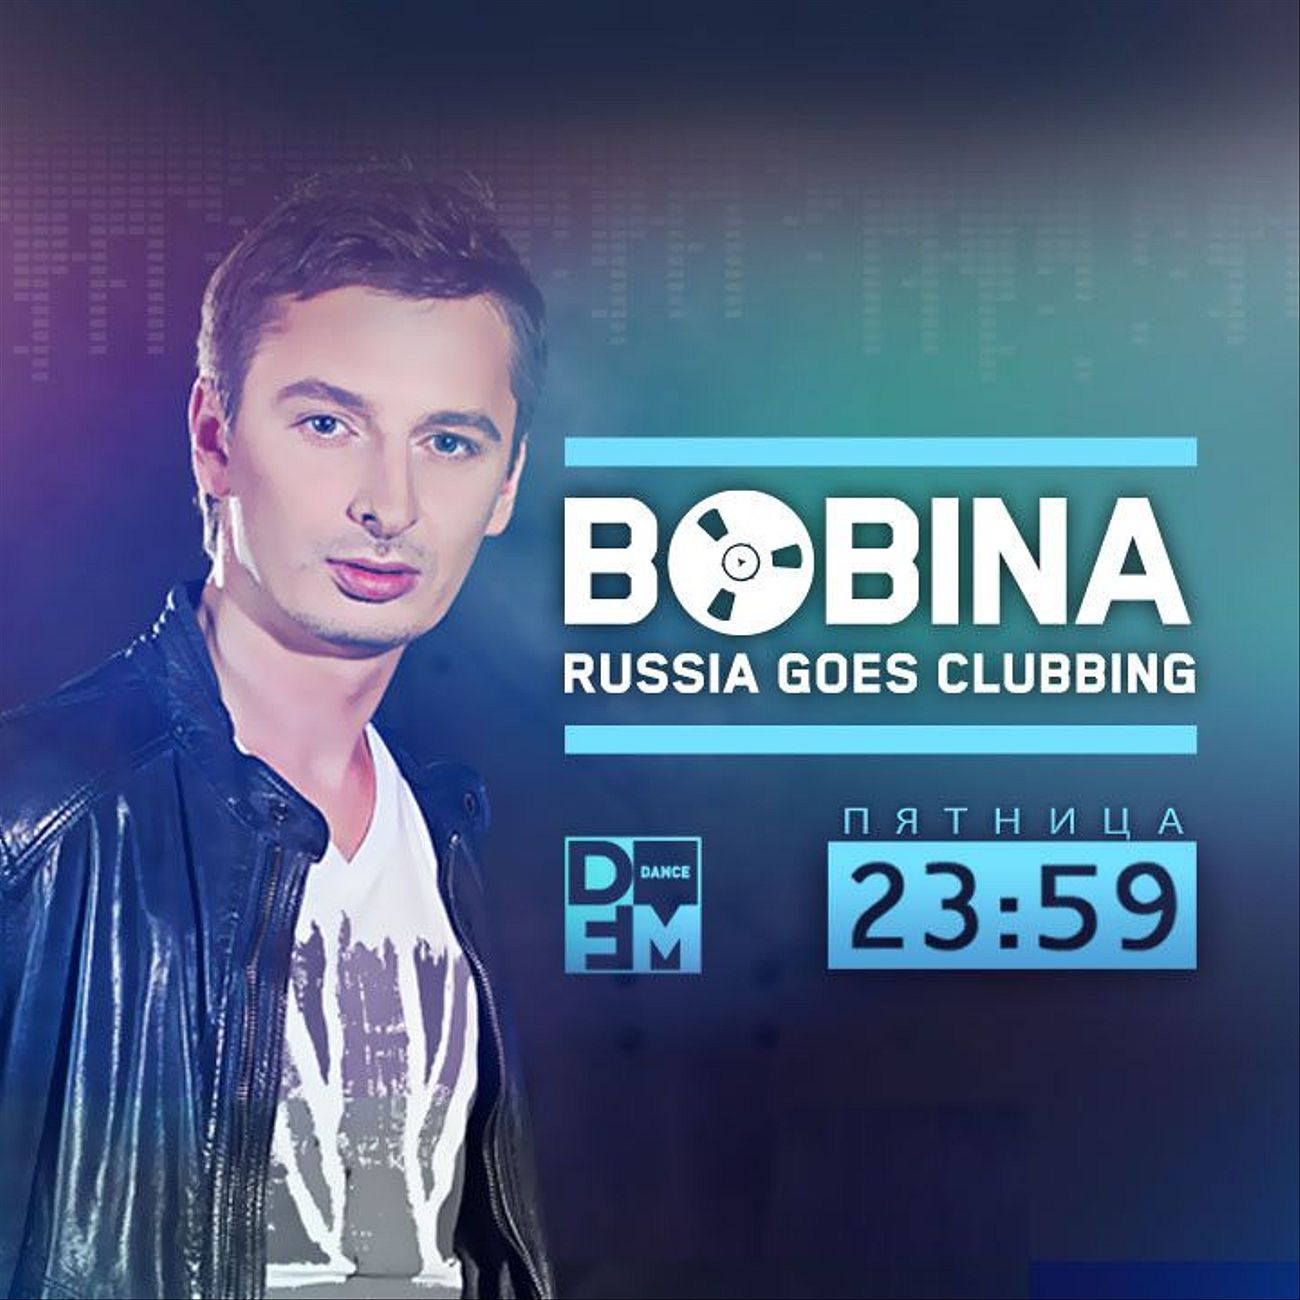 BOBINA / RUSSIA GOES CLUBBING